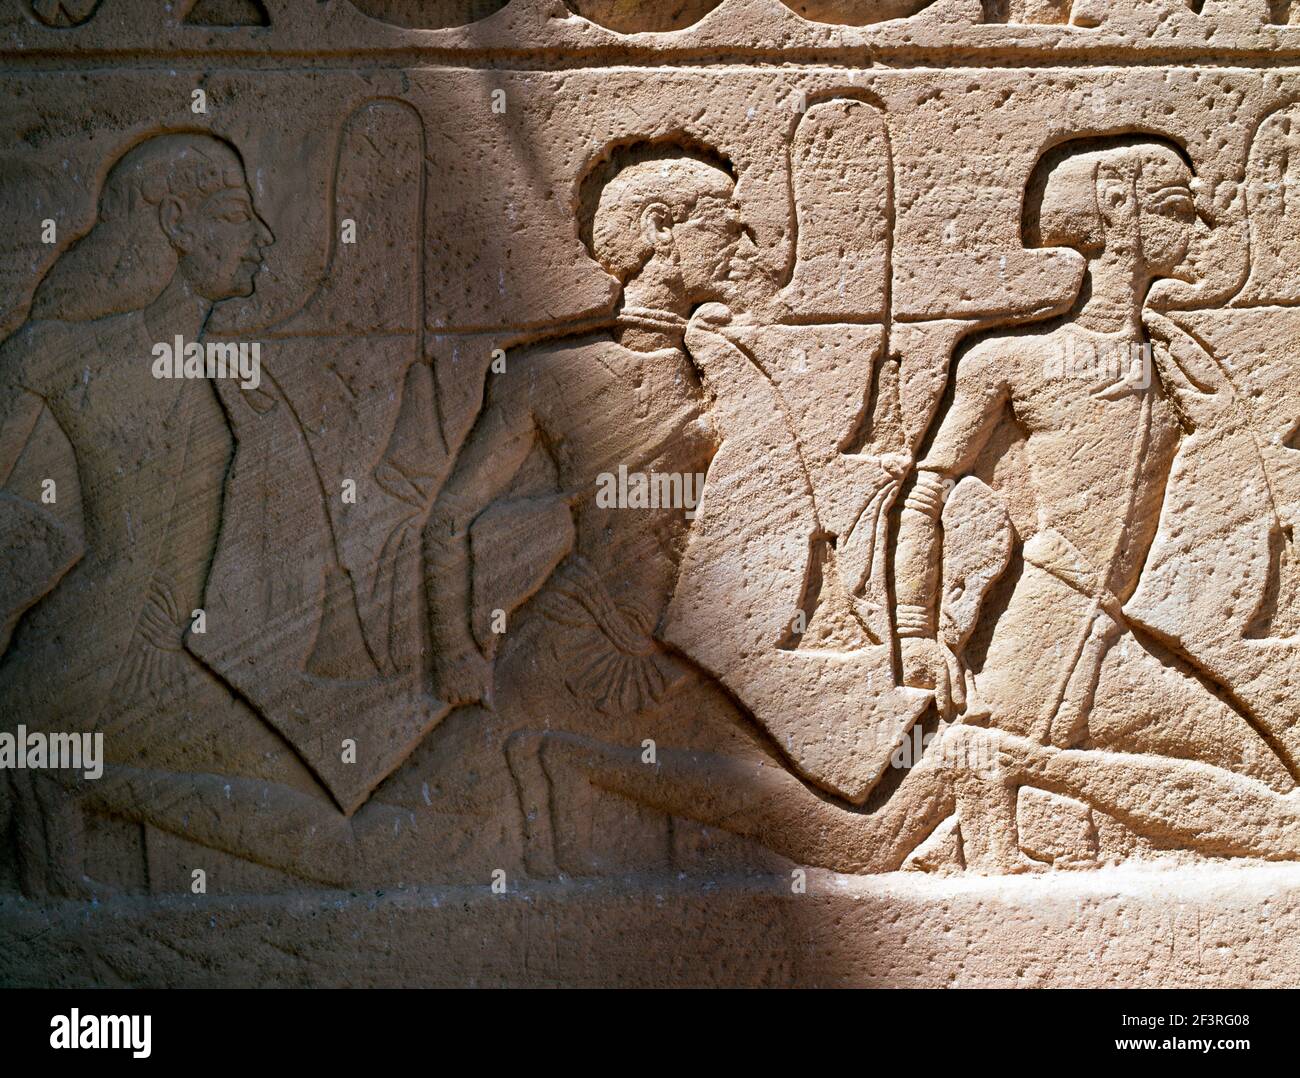 Abu Simbel Egypt Temple of Ramses II Nubian Prisoners Stock Photo